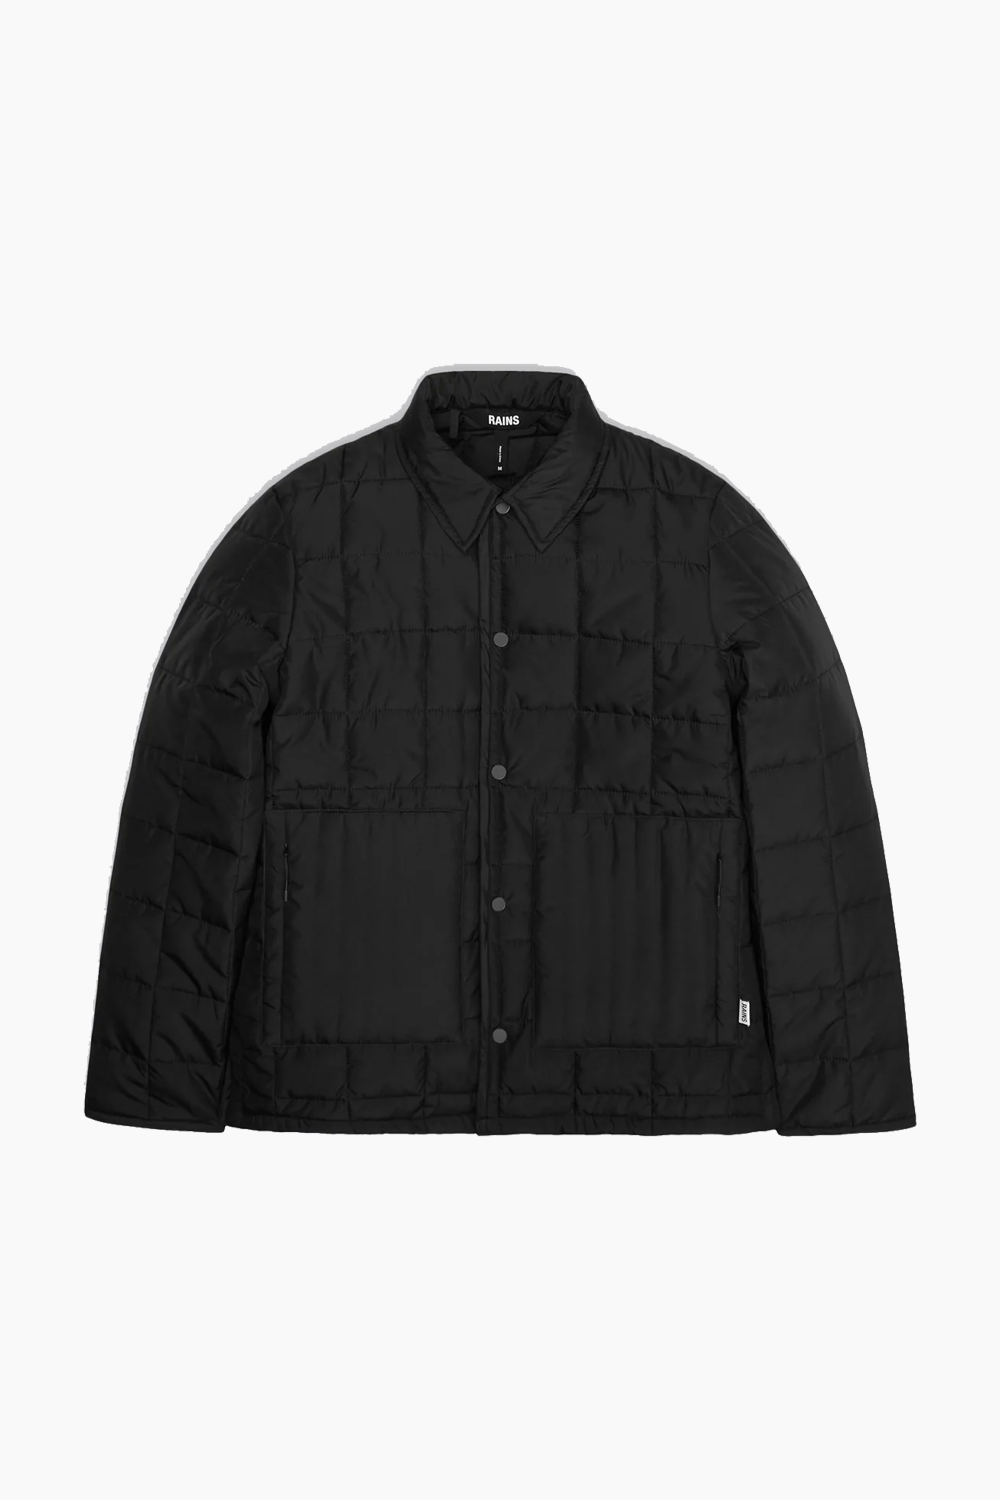 Liner Shirt Jacket W1T1 - Black - Rains